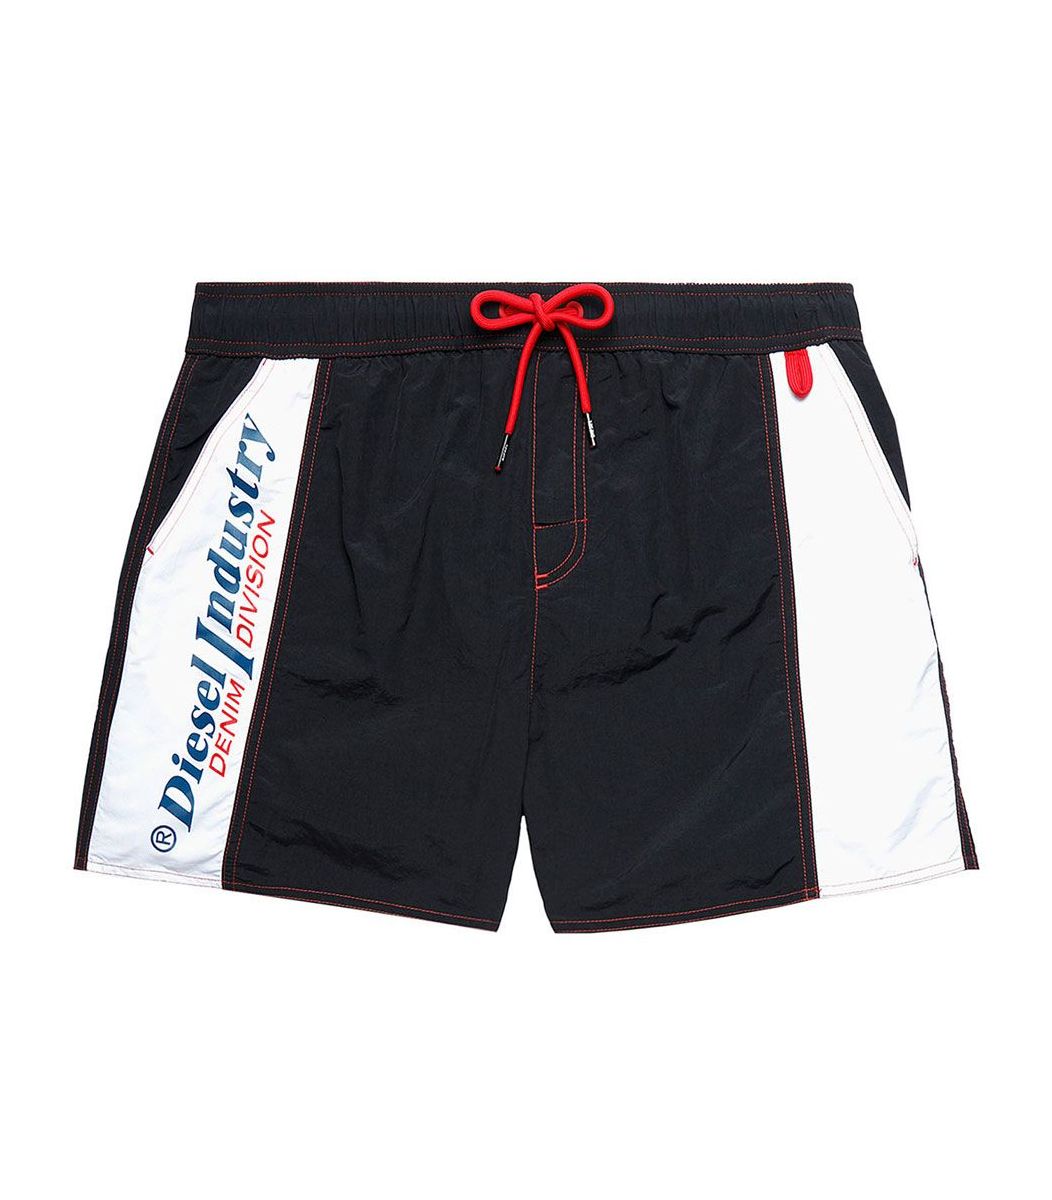  Swimwear Shorts DIESEL Diesel Men Mid-length swim shorts with side panels 00SXLH-0PCAI-E0013-3